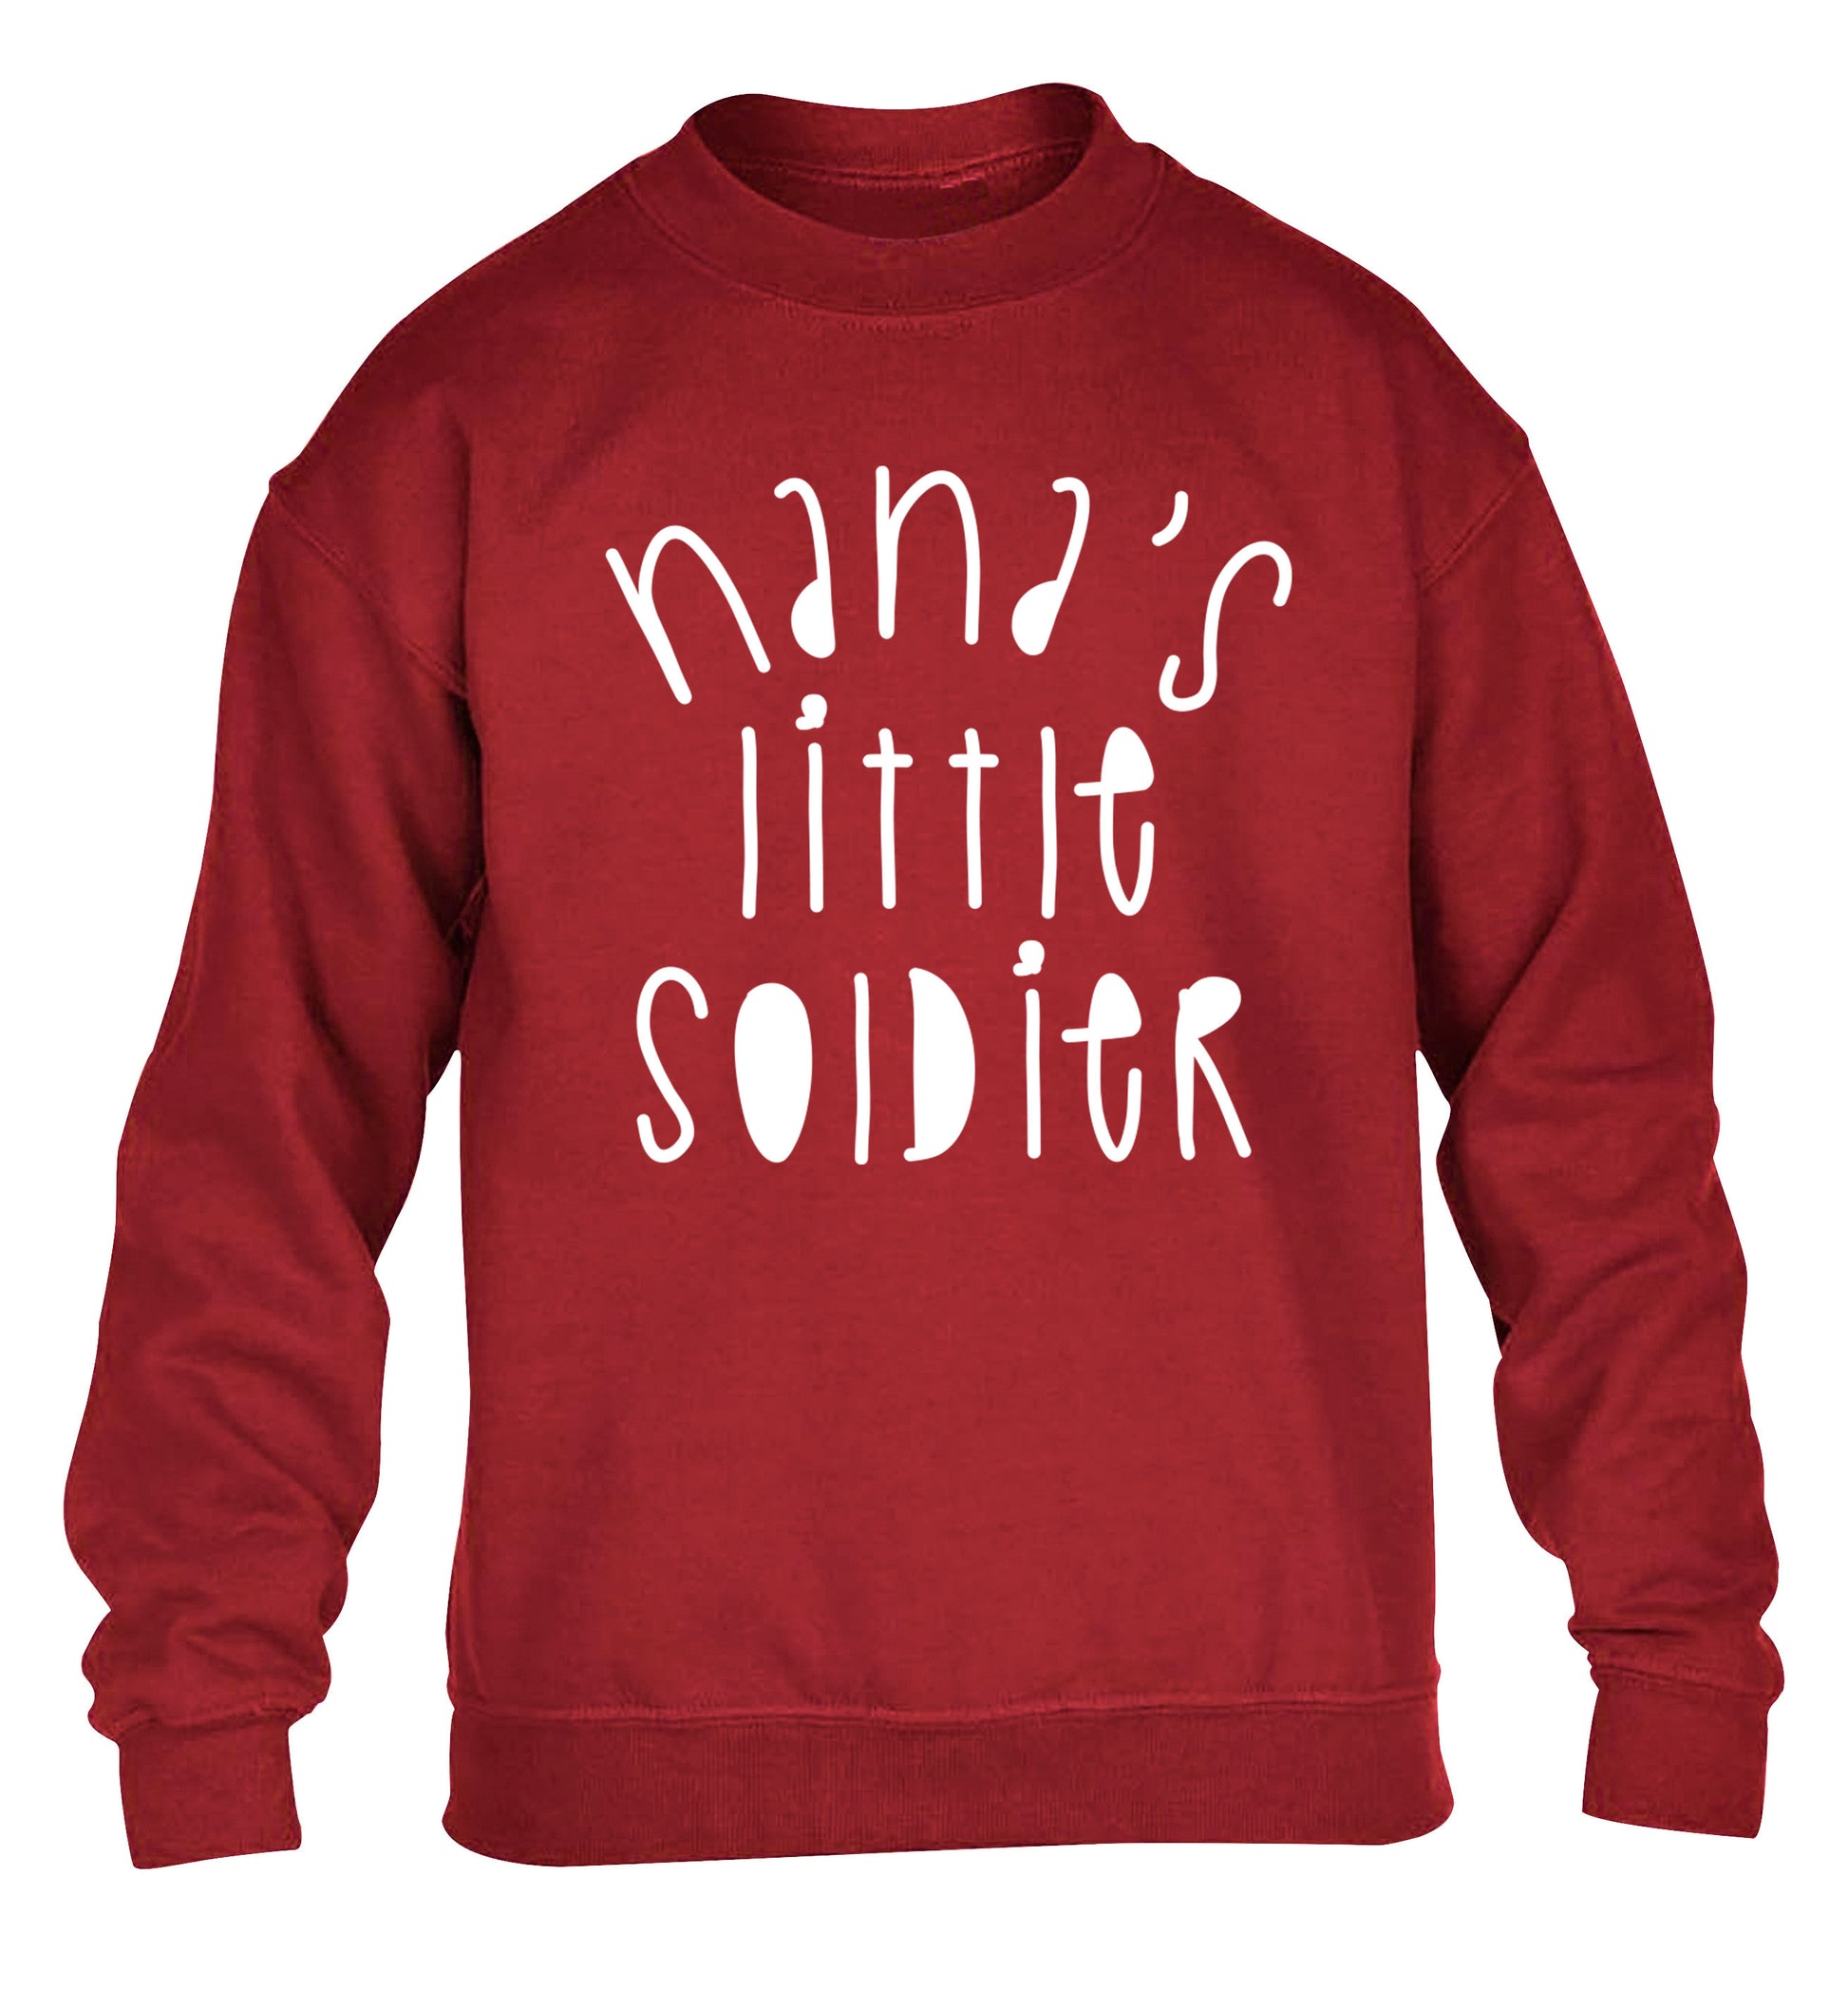 Nana's little soldier children's grey sweater 12-14 Years